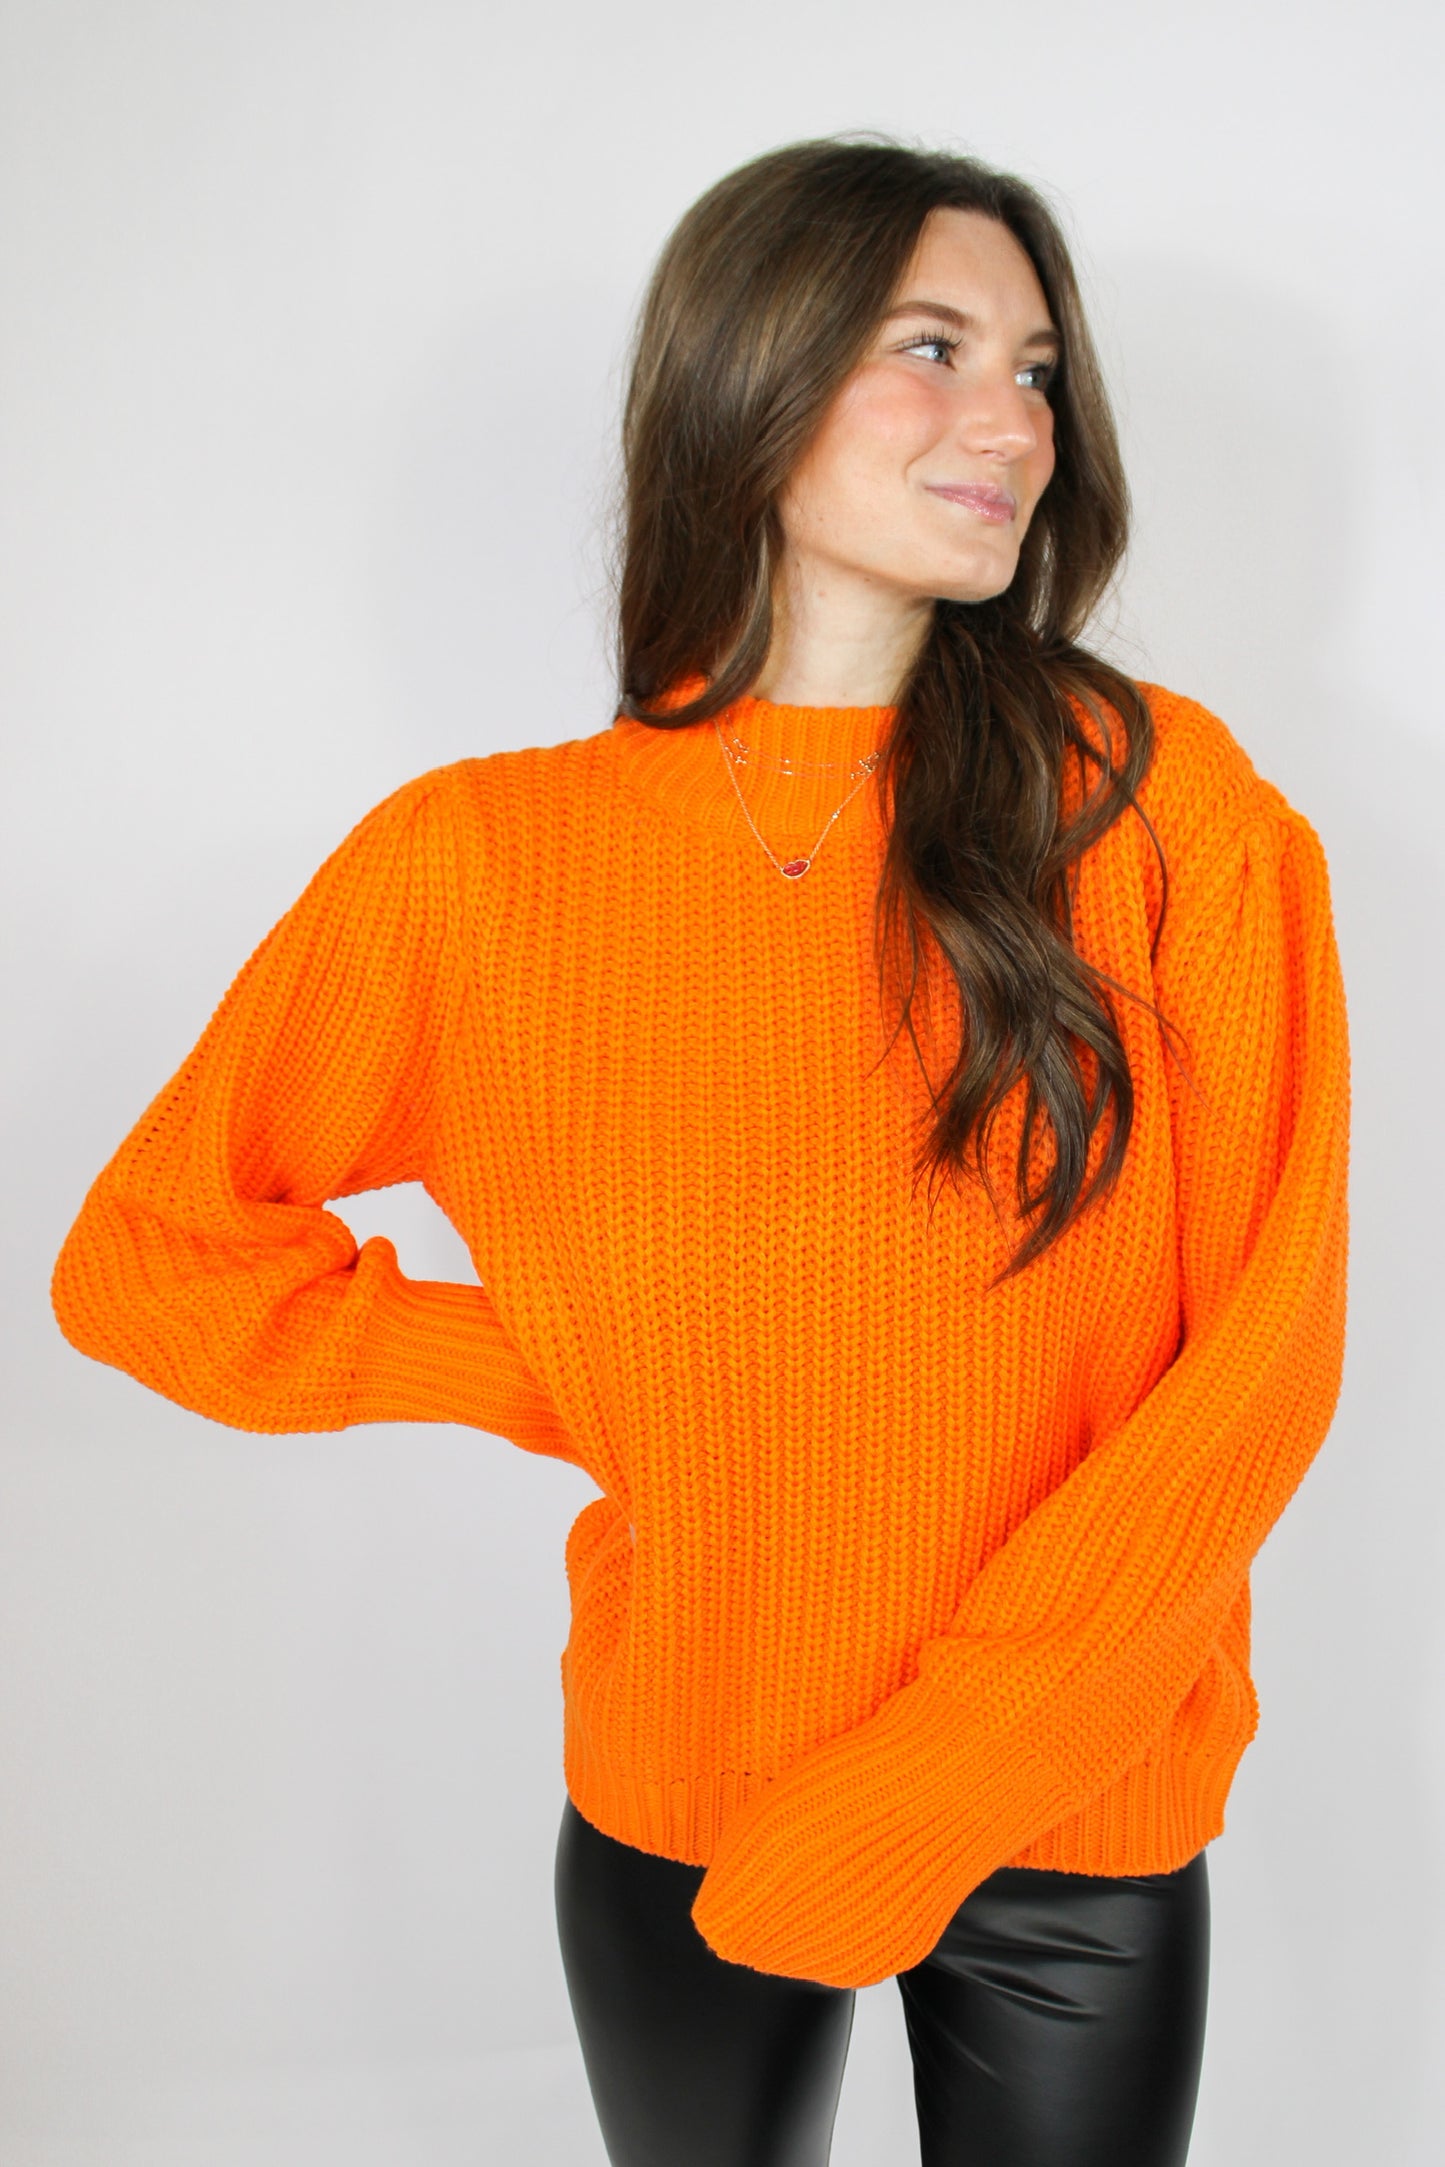 In the Orange Sweater